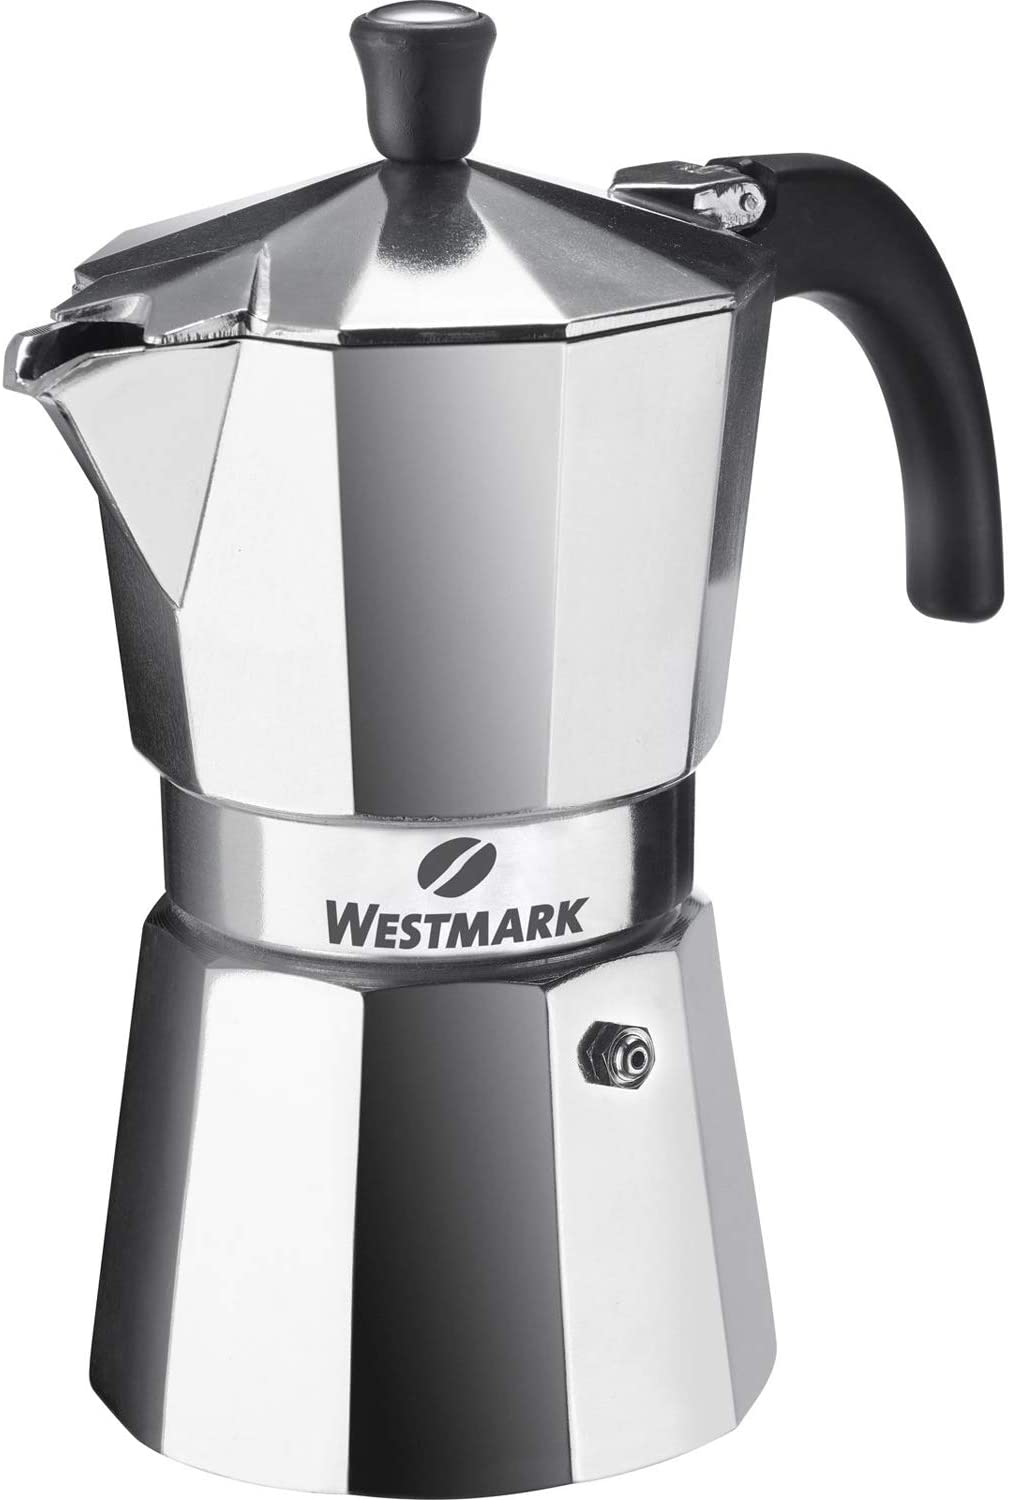 Westmark Brazilia 24622260 Espresso Maker for 6 Cups Aluminium